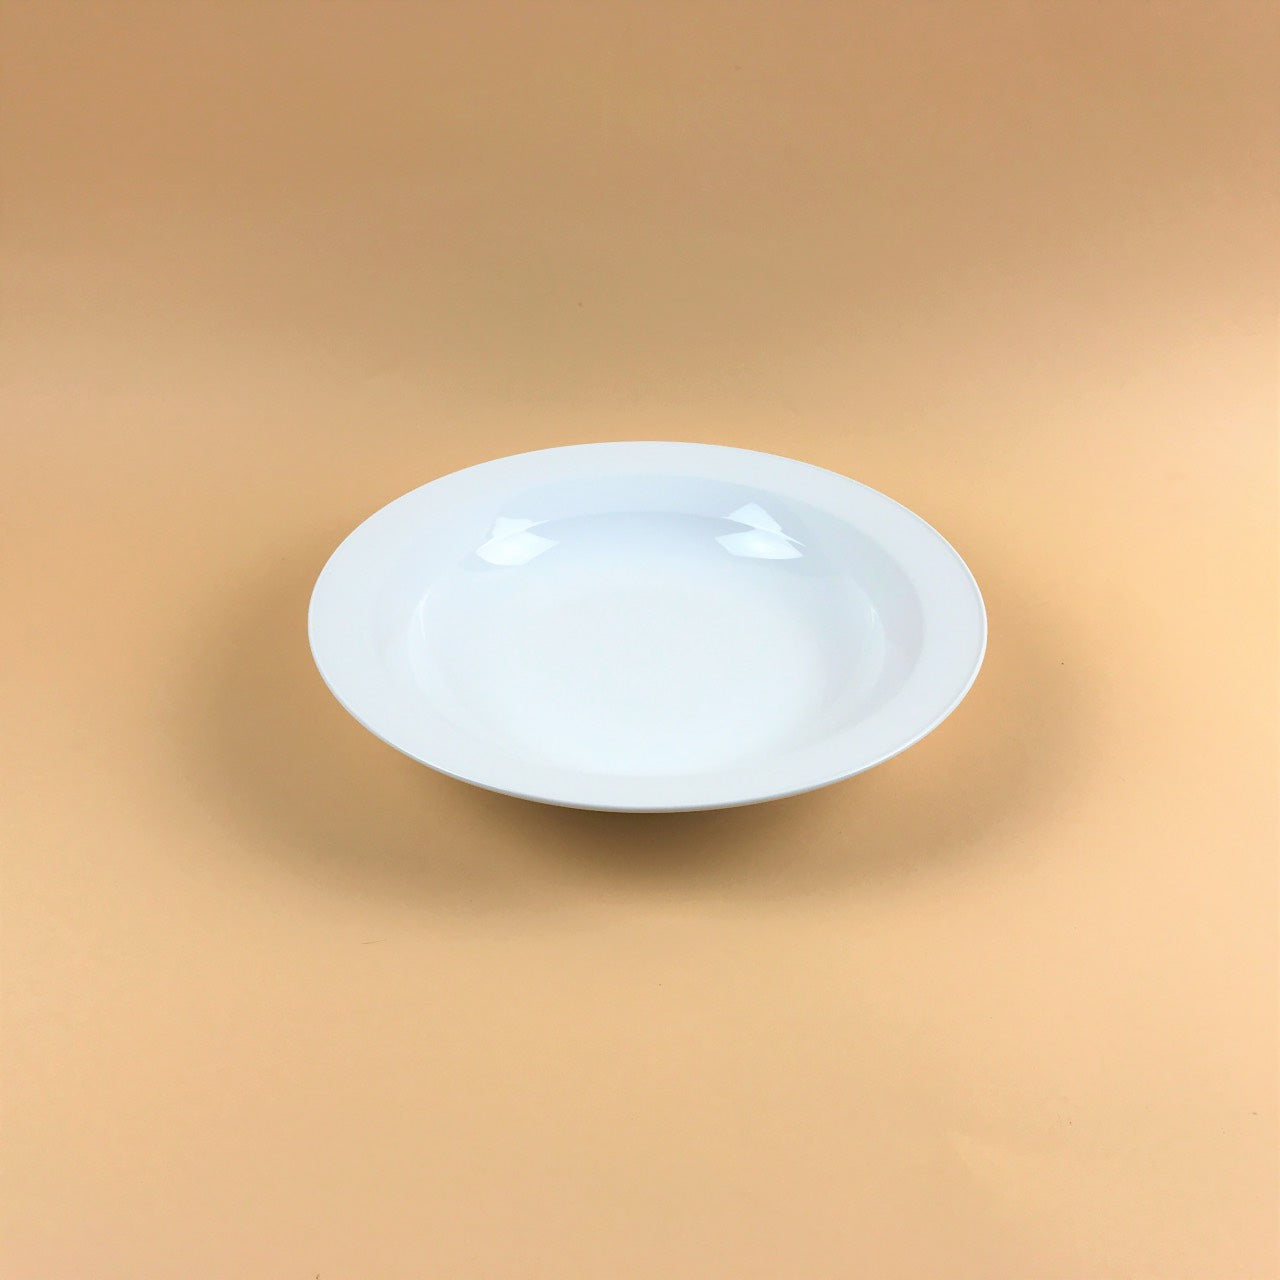 Basic White Small Plates Restaurant Supply Bowery Discount Sale Osara New York